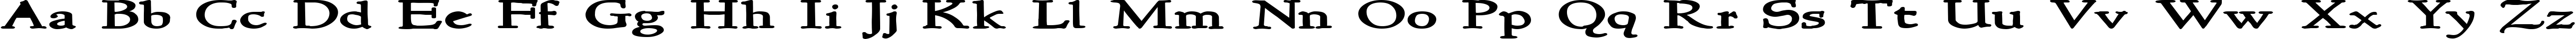 Пример написания английского алфавита шрифтом NewStyleWide Bold